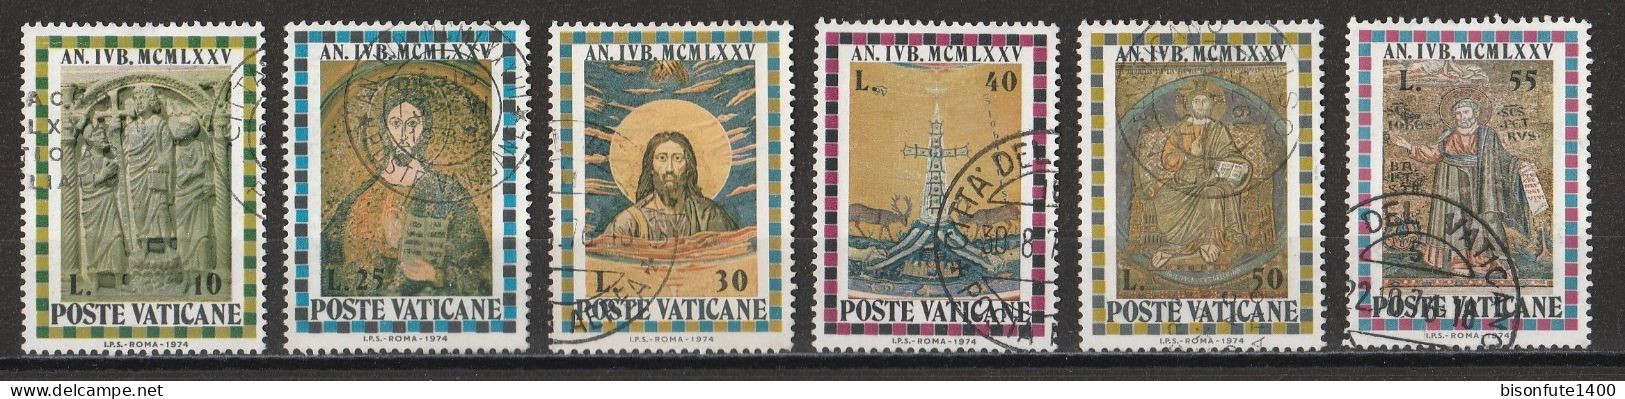 Vatican 1975 : Timbres Yvert & Tellier N° 582 - 583 - 584 - 585 - 586 - 587 - 588 - 589 - 590 - 591 Et 592 Oblitérés. - Usati